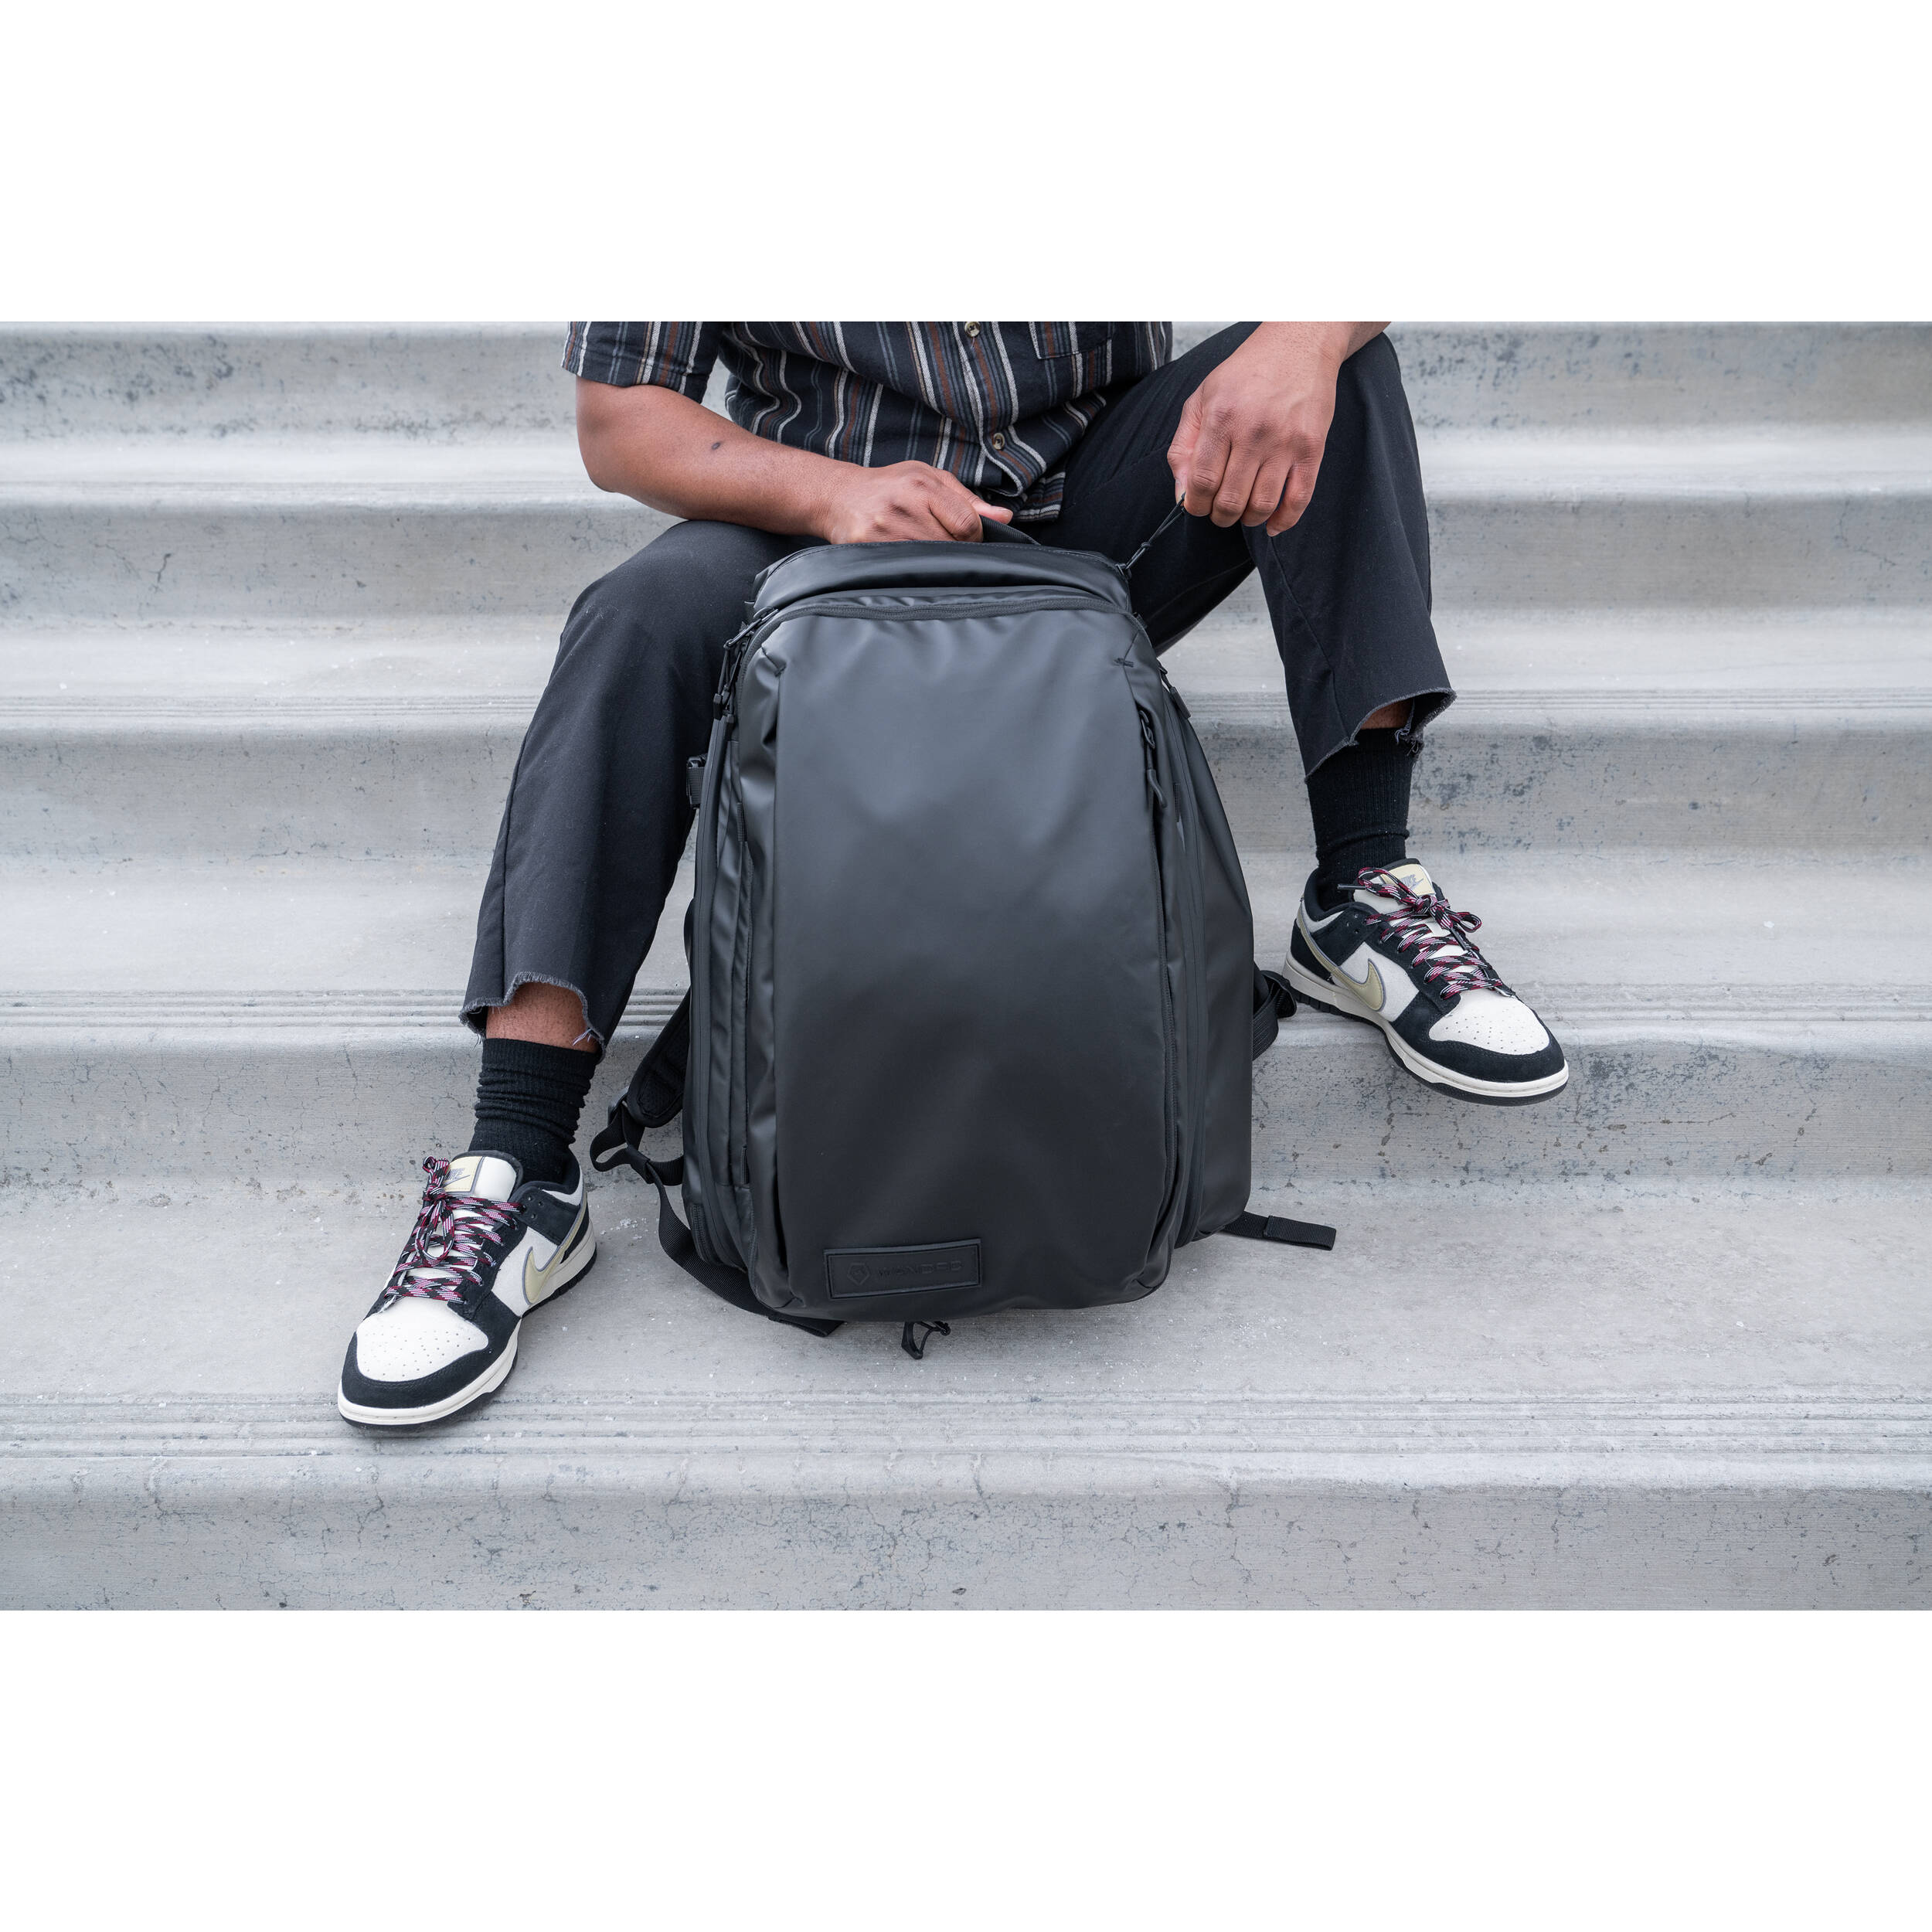 WANDRD Transit Travel Backpack - 35L - Black